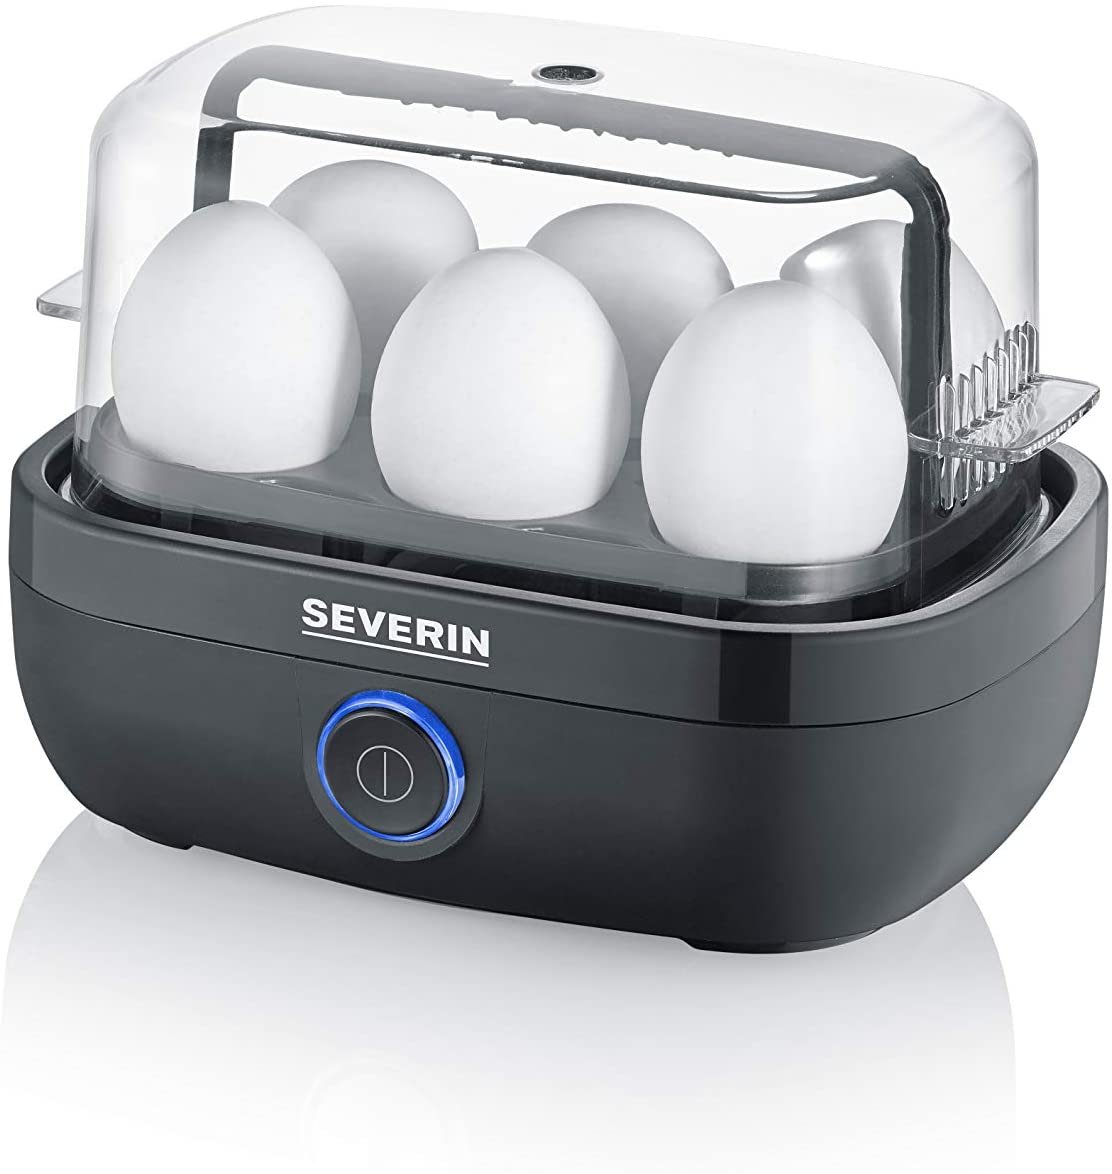 Kiaušinių viryklė Severin EK 3166 420W, juoda